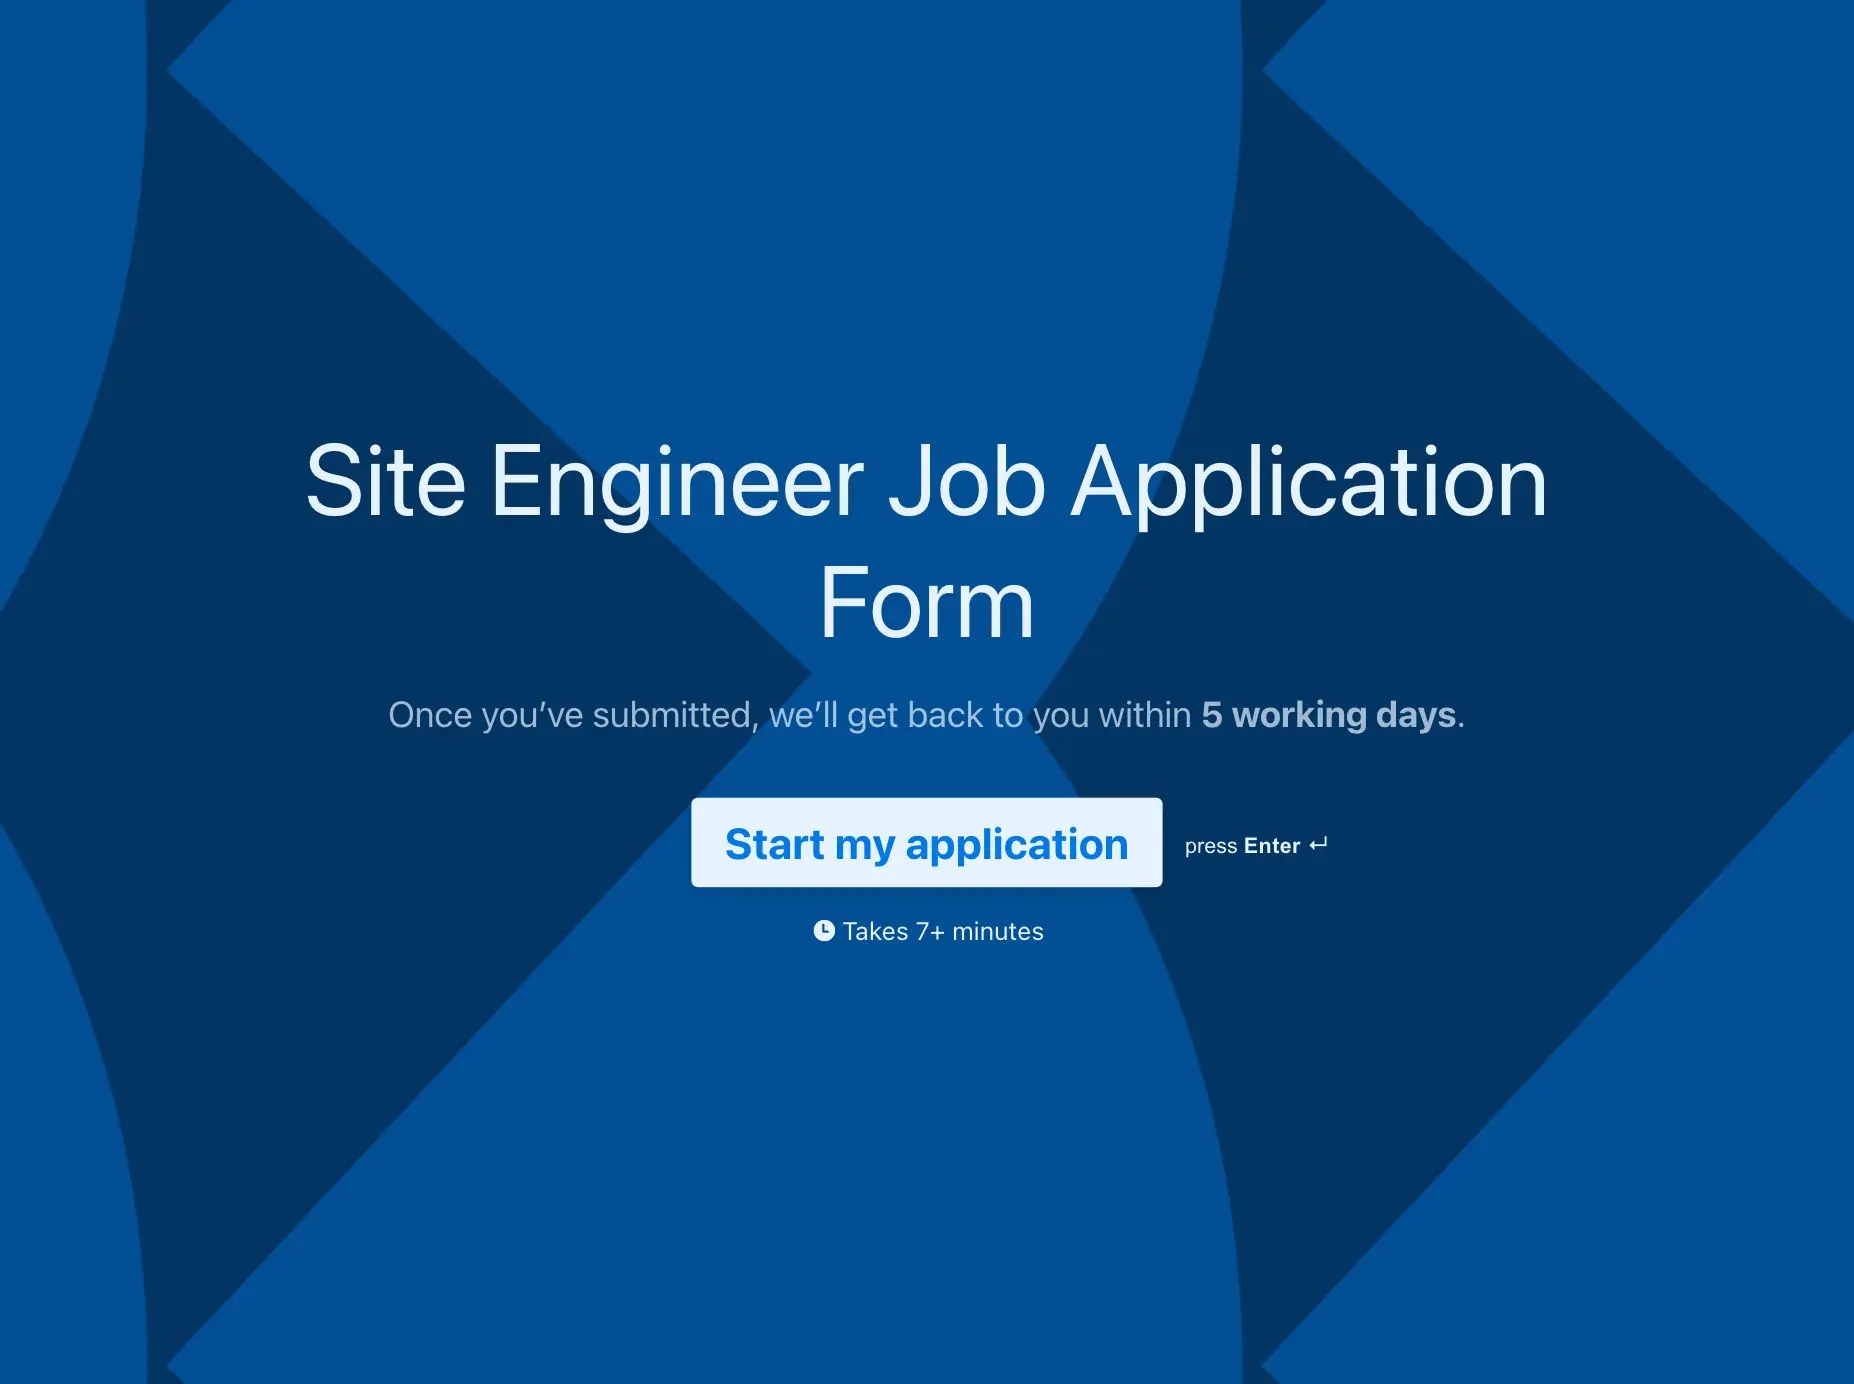 Site Engineer Job Application Form Template Hero